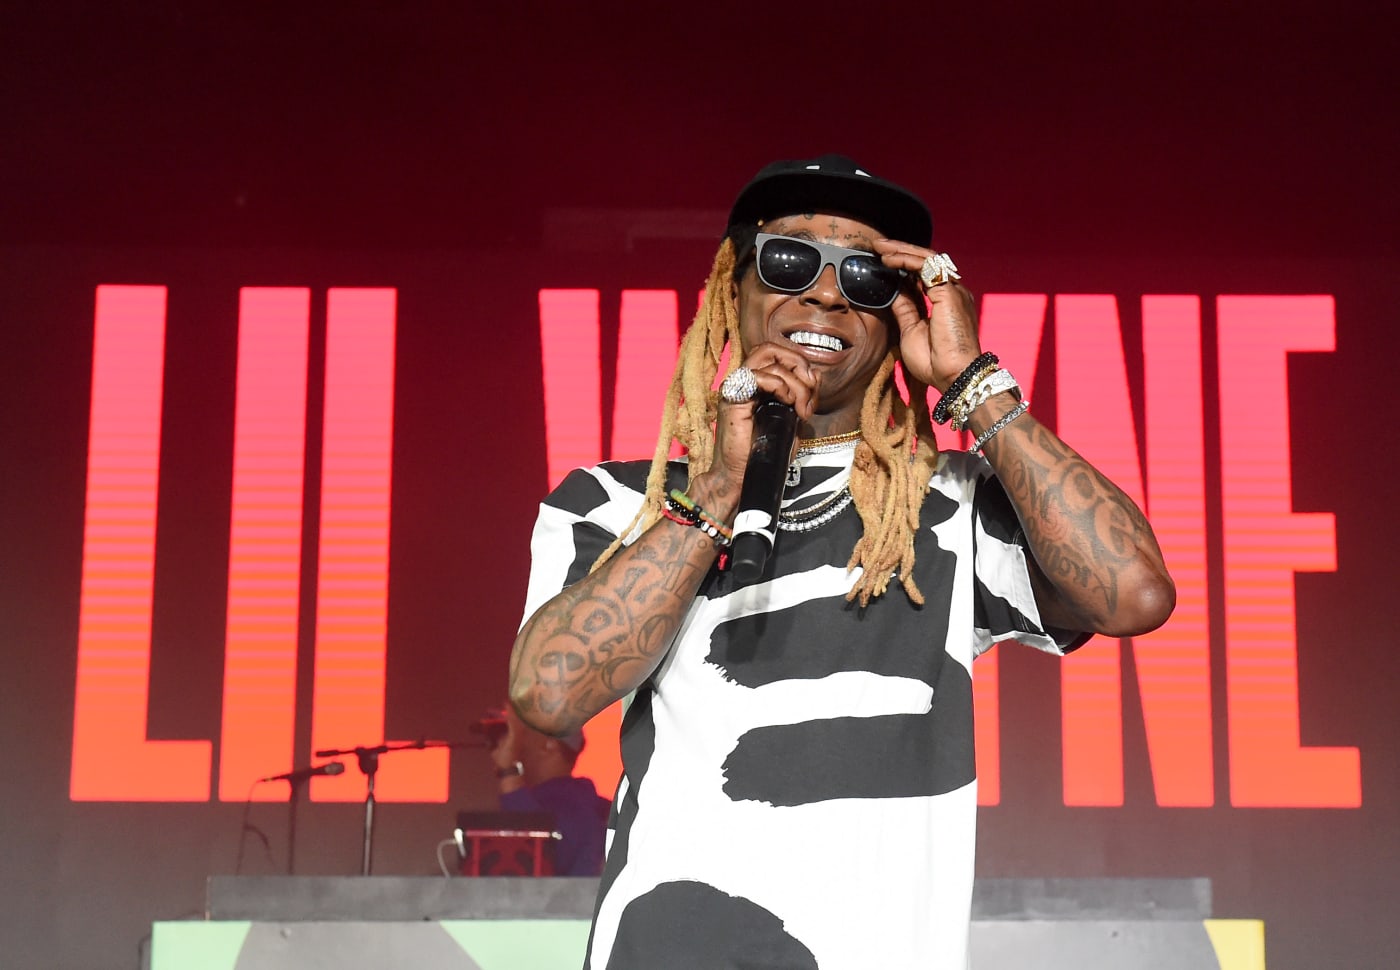 Lil Wayne performing live on stage